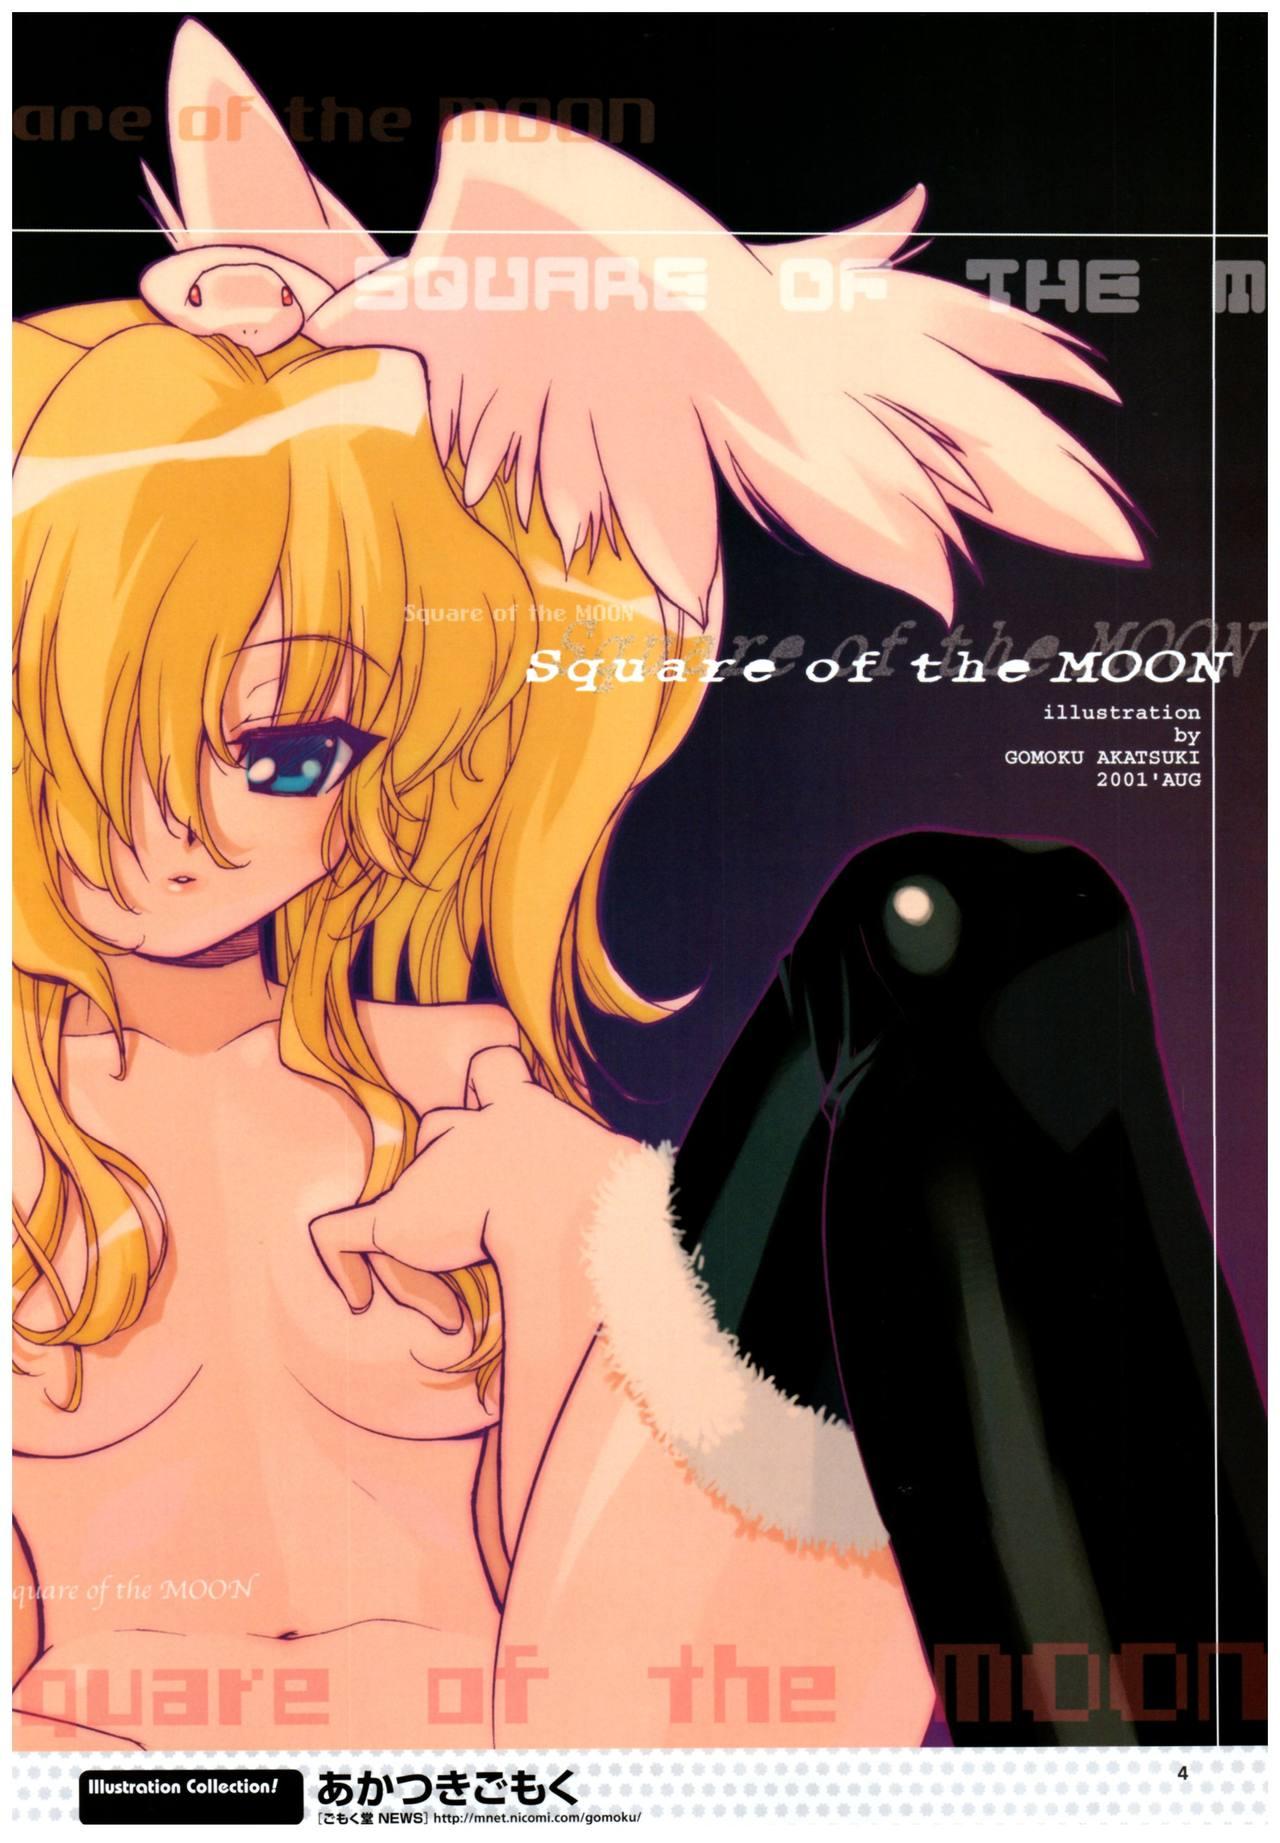 Yoru Ga Kuru! Square Of The Moon Visual Fan Book 138